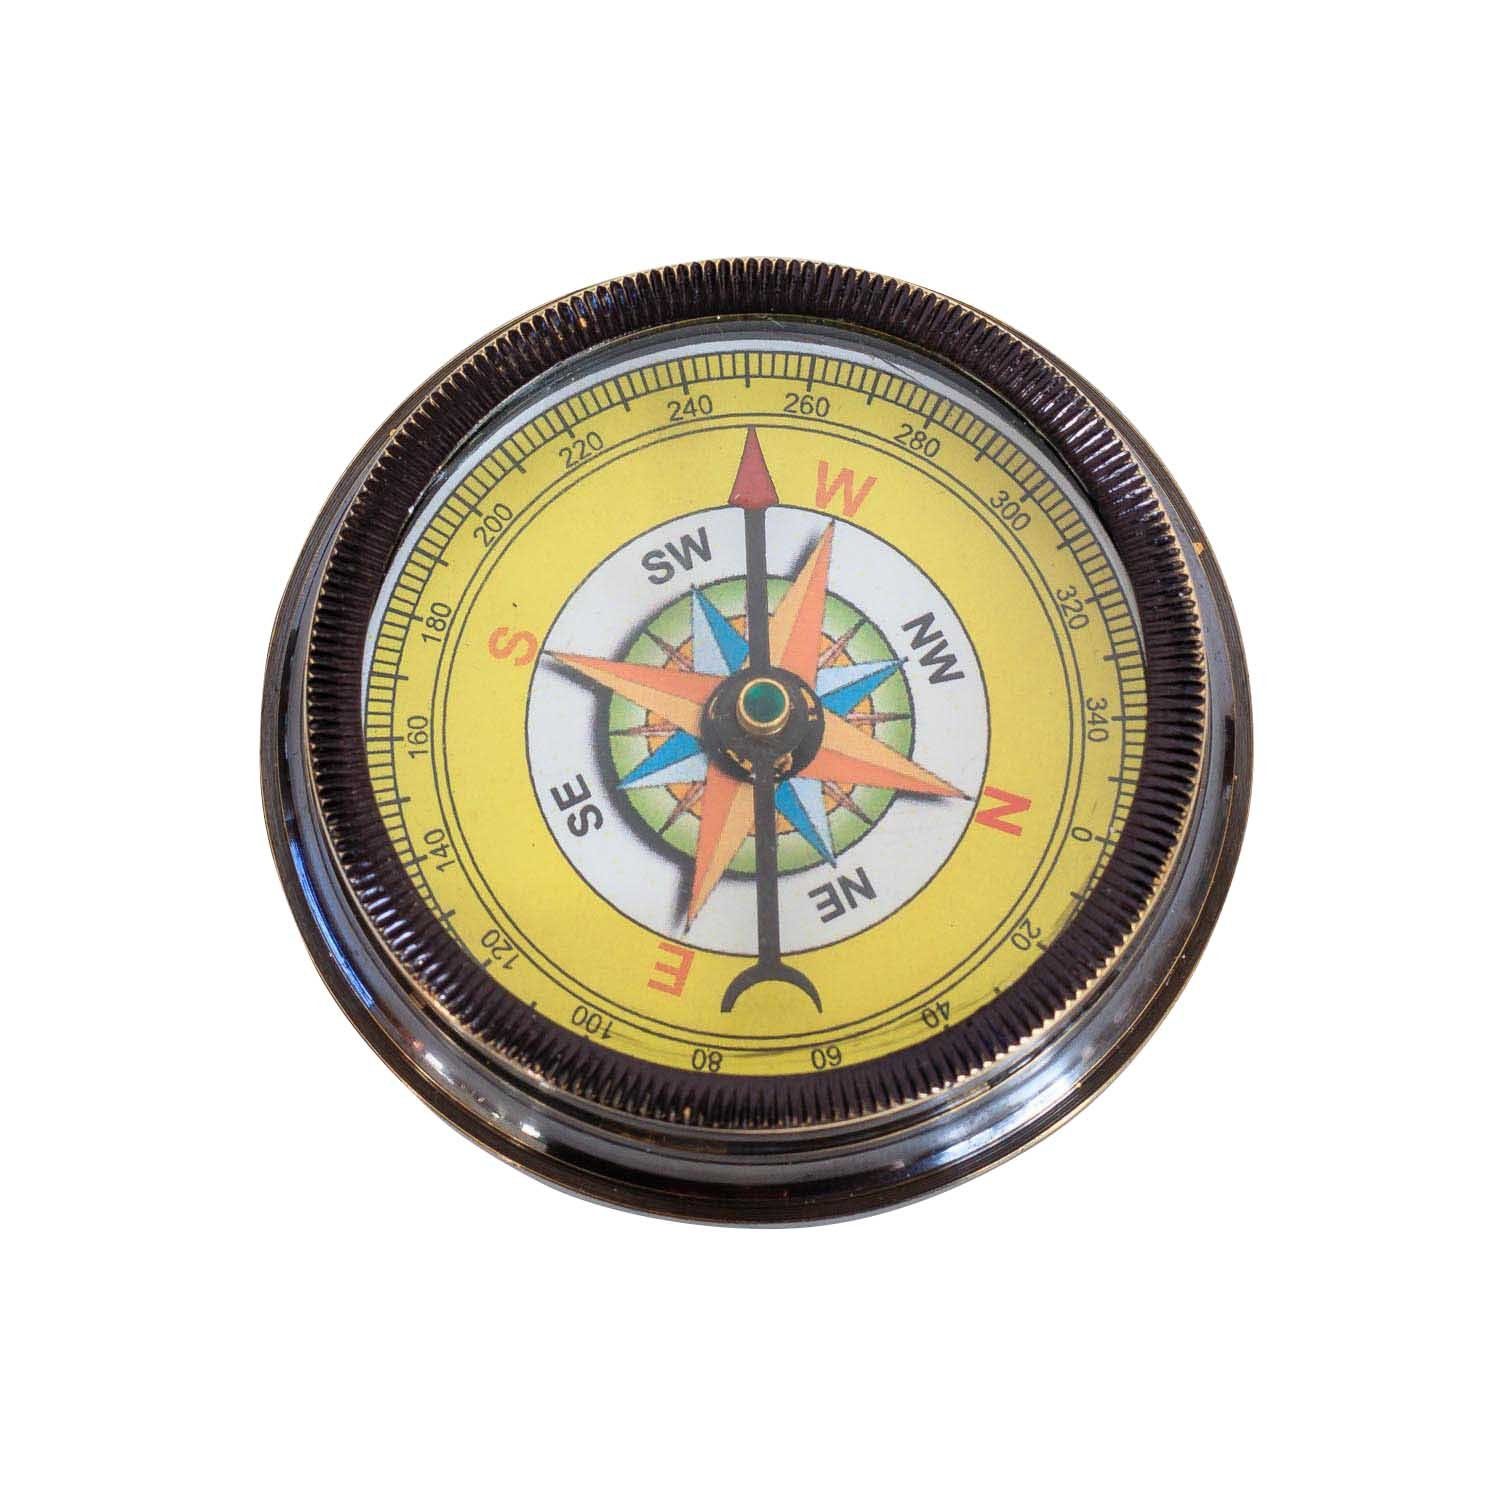 Kompass Schiff Kompass Maritim Aubaho Navigation Dekoration Antik-Stil Messing